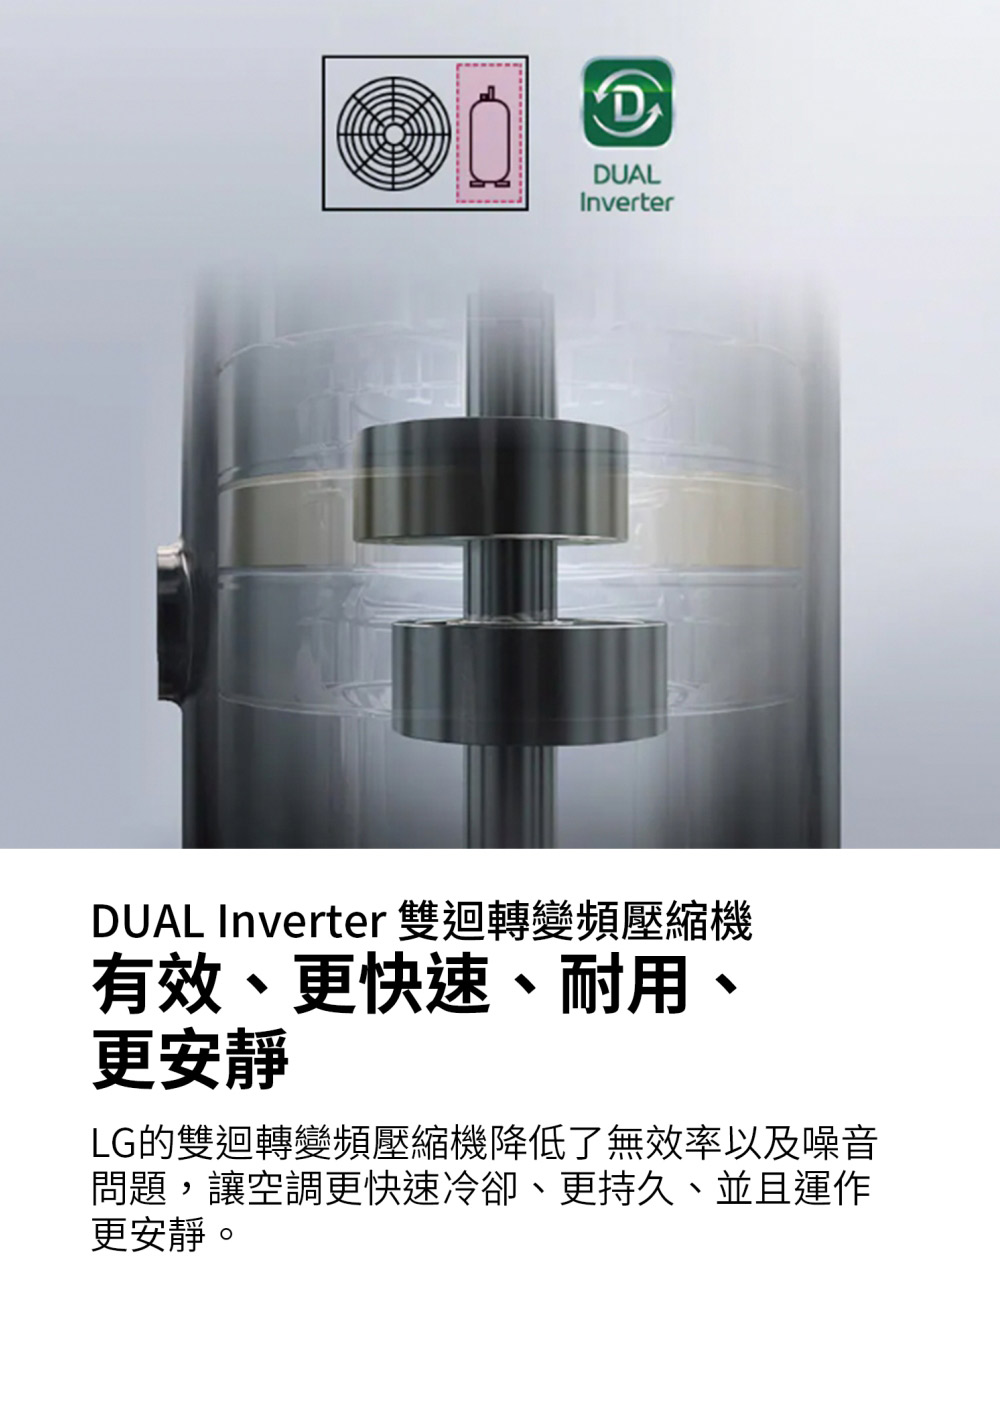 DUAL Inverter 雙迴轉變頻壓縮機